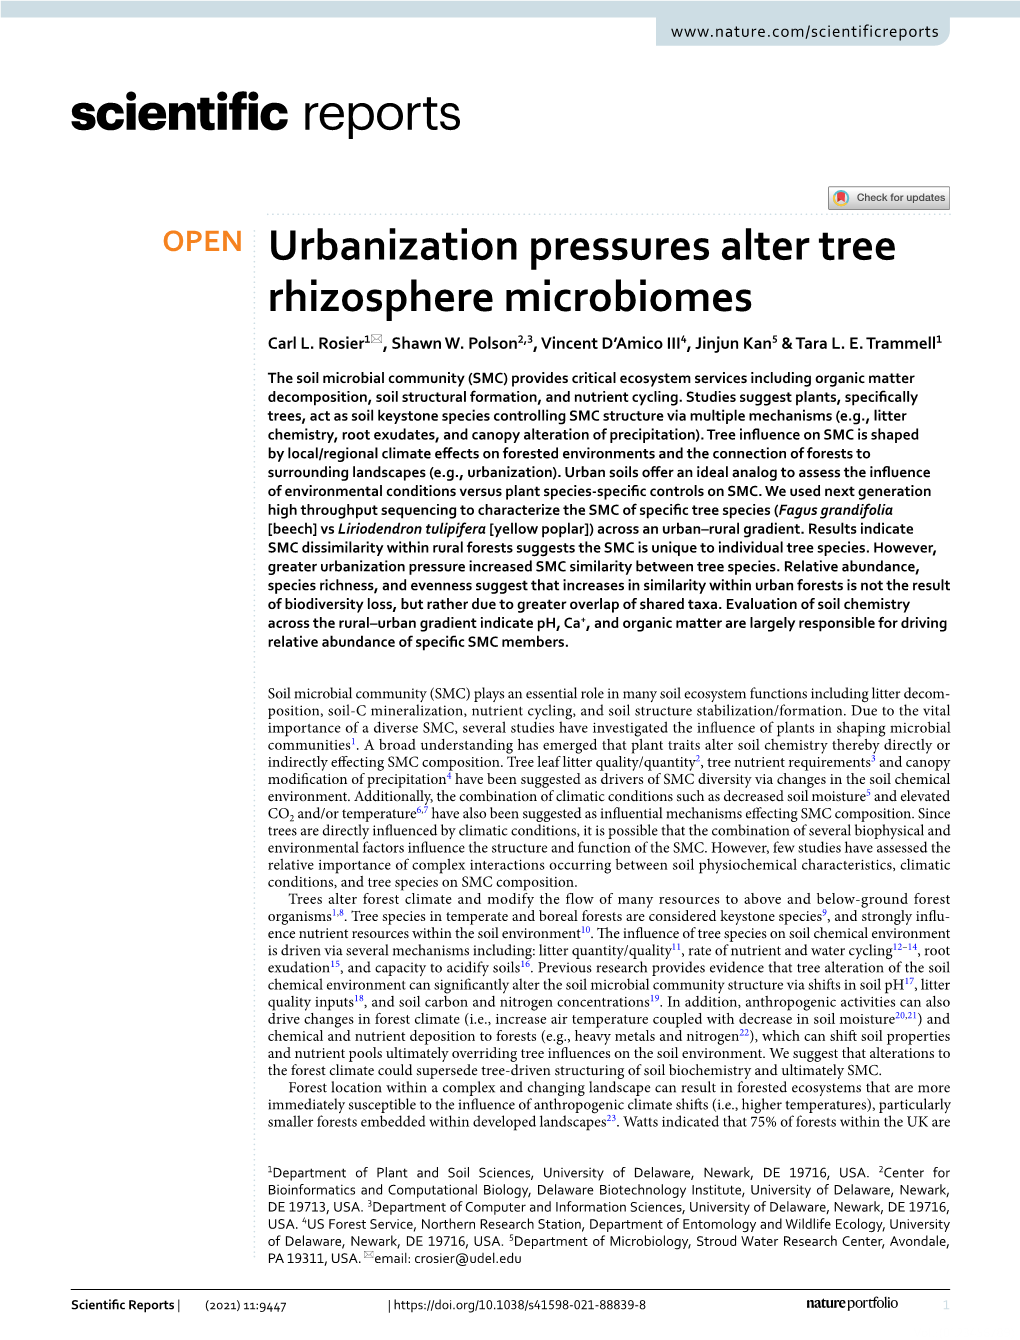 Urbanization Pressures Alter Tree Rhizosphere Microbiomes Carl L